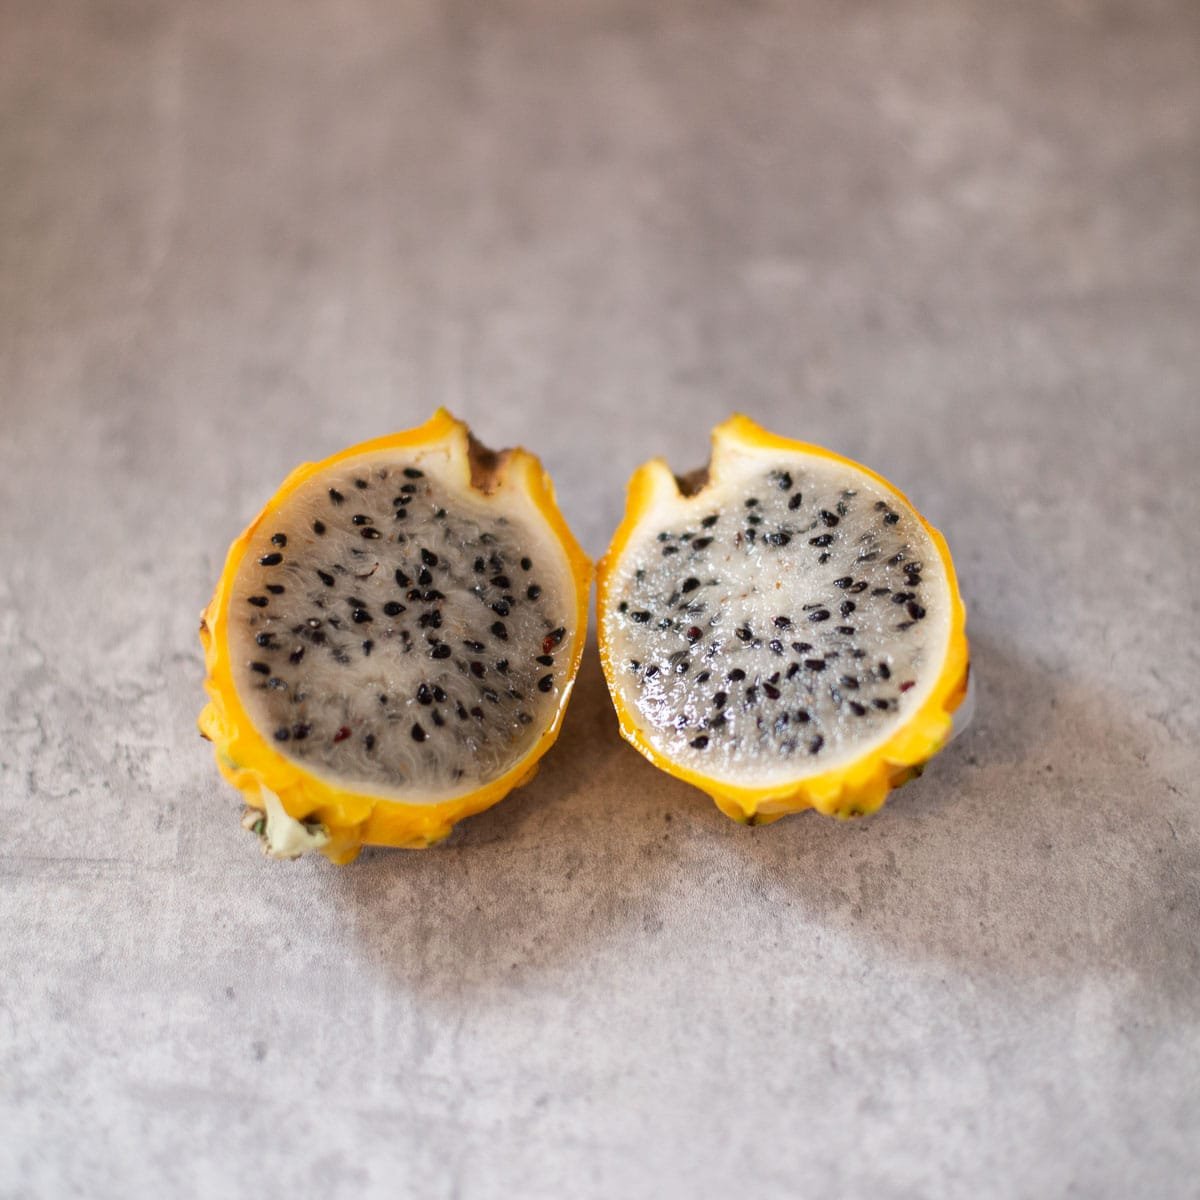 yellow dragon fruit split in half revealing white fruit filled with black seeds